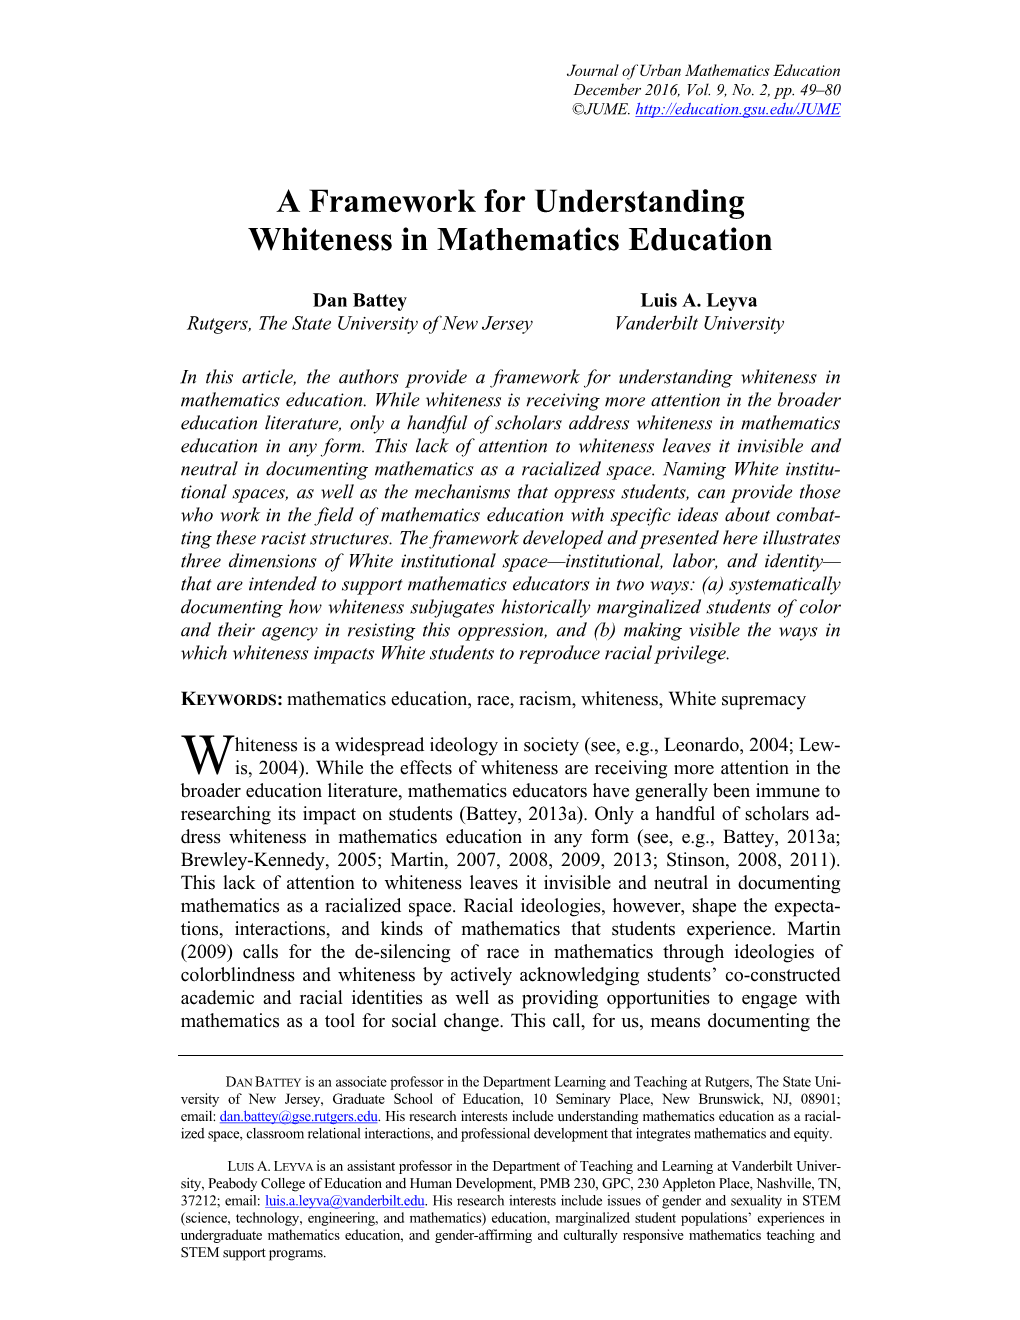 A Framework for Understanding Whiteness in Mathematics Education